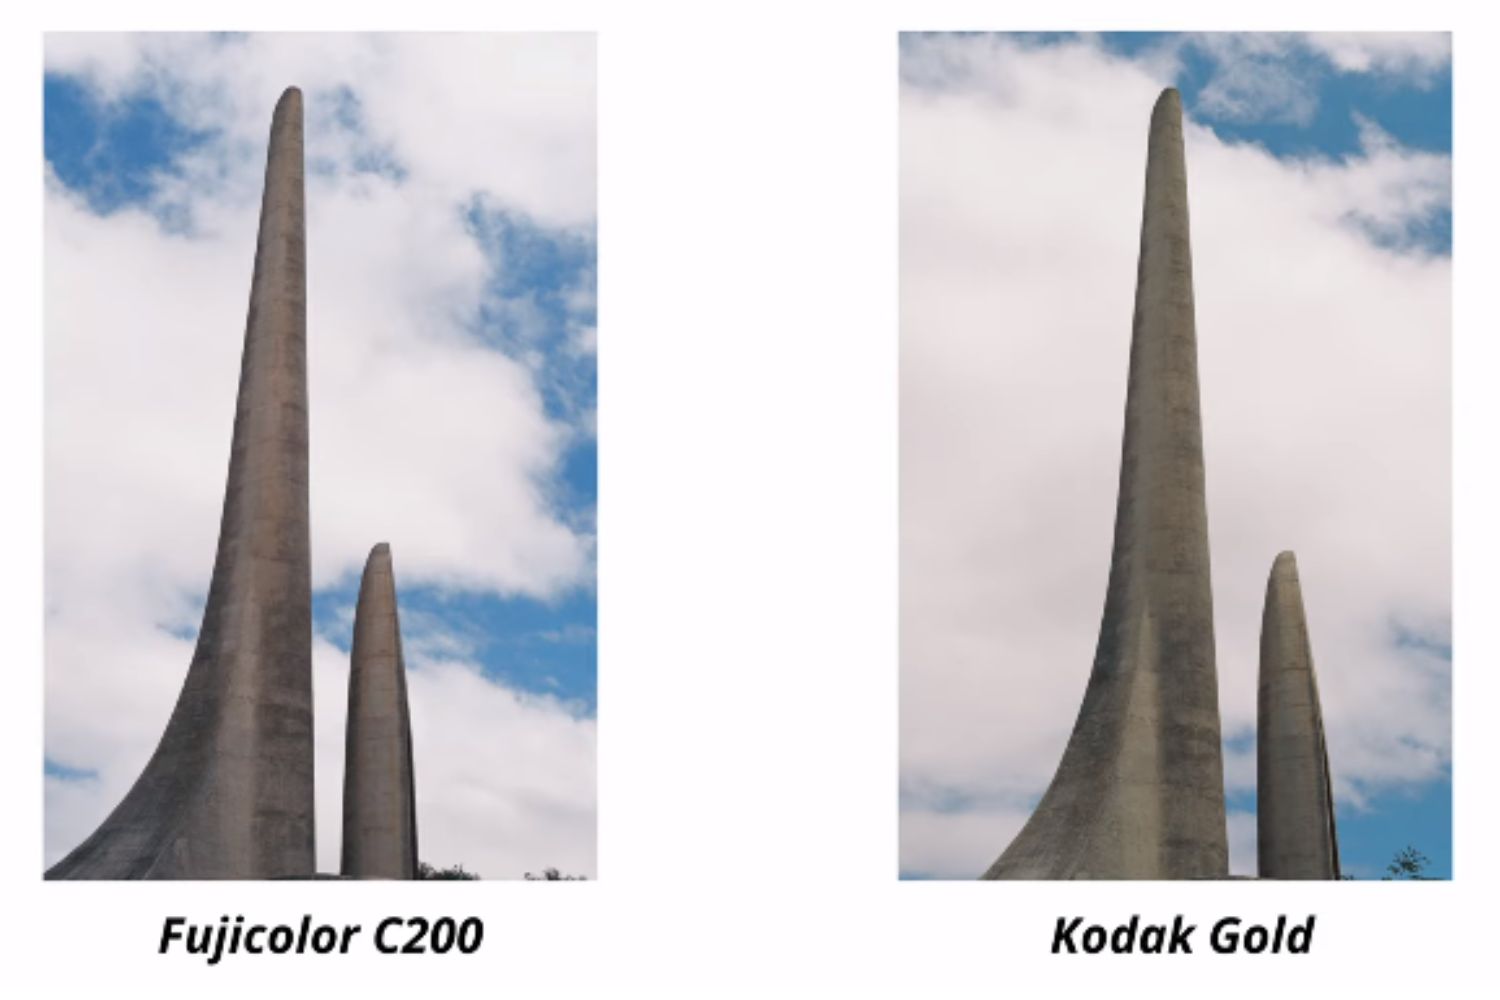 Structure in fuji c200 and kodak g200